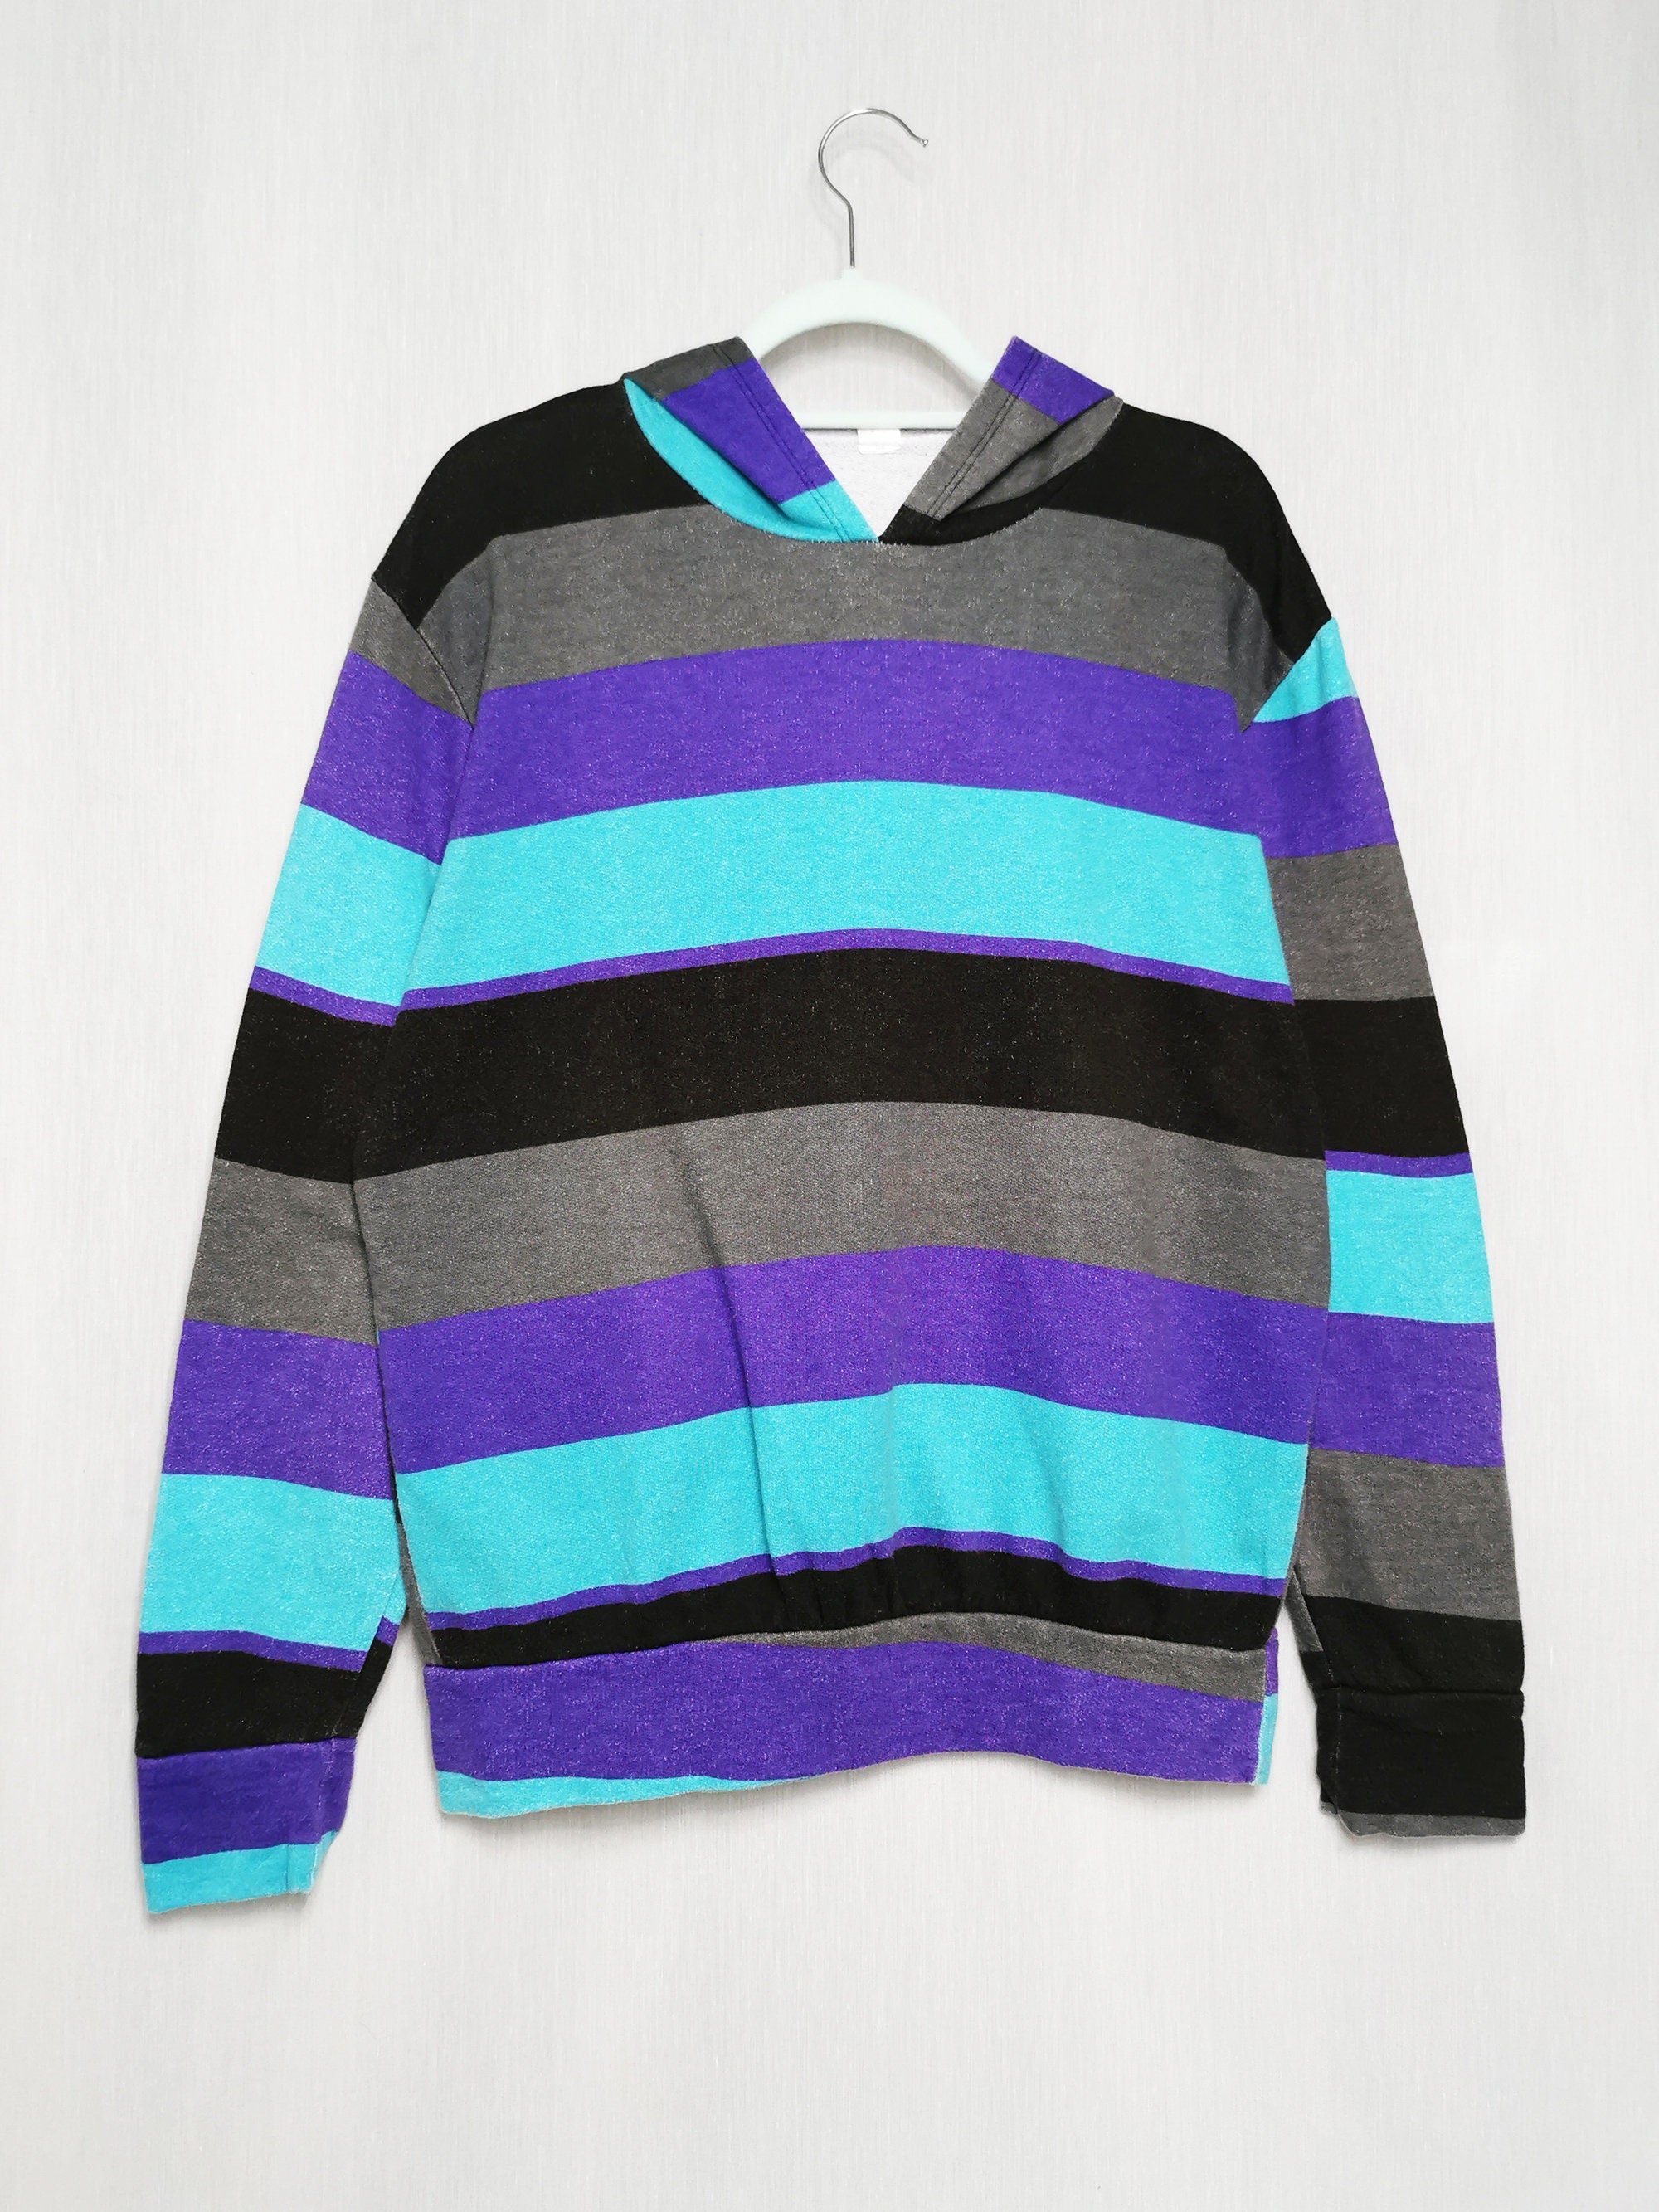 Vintage 90s hooded striped oversized sweatshirt